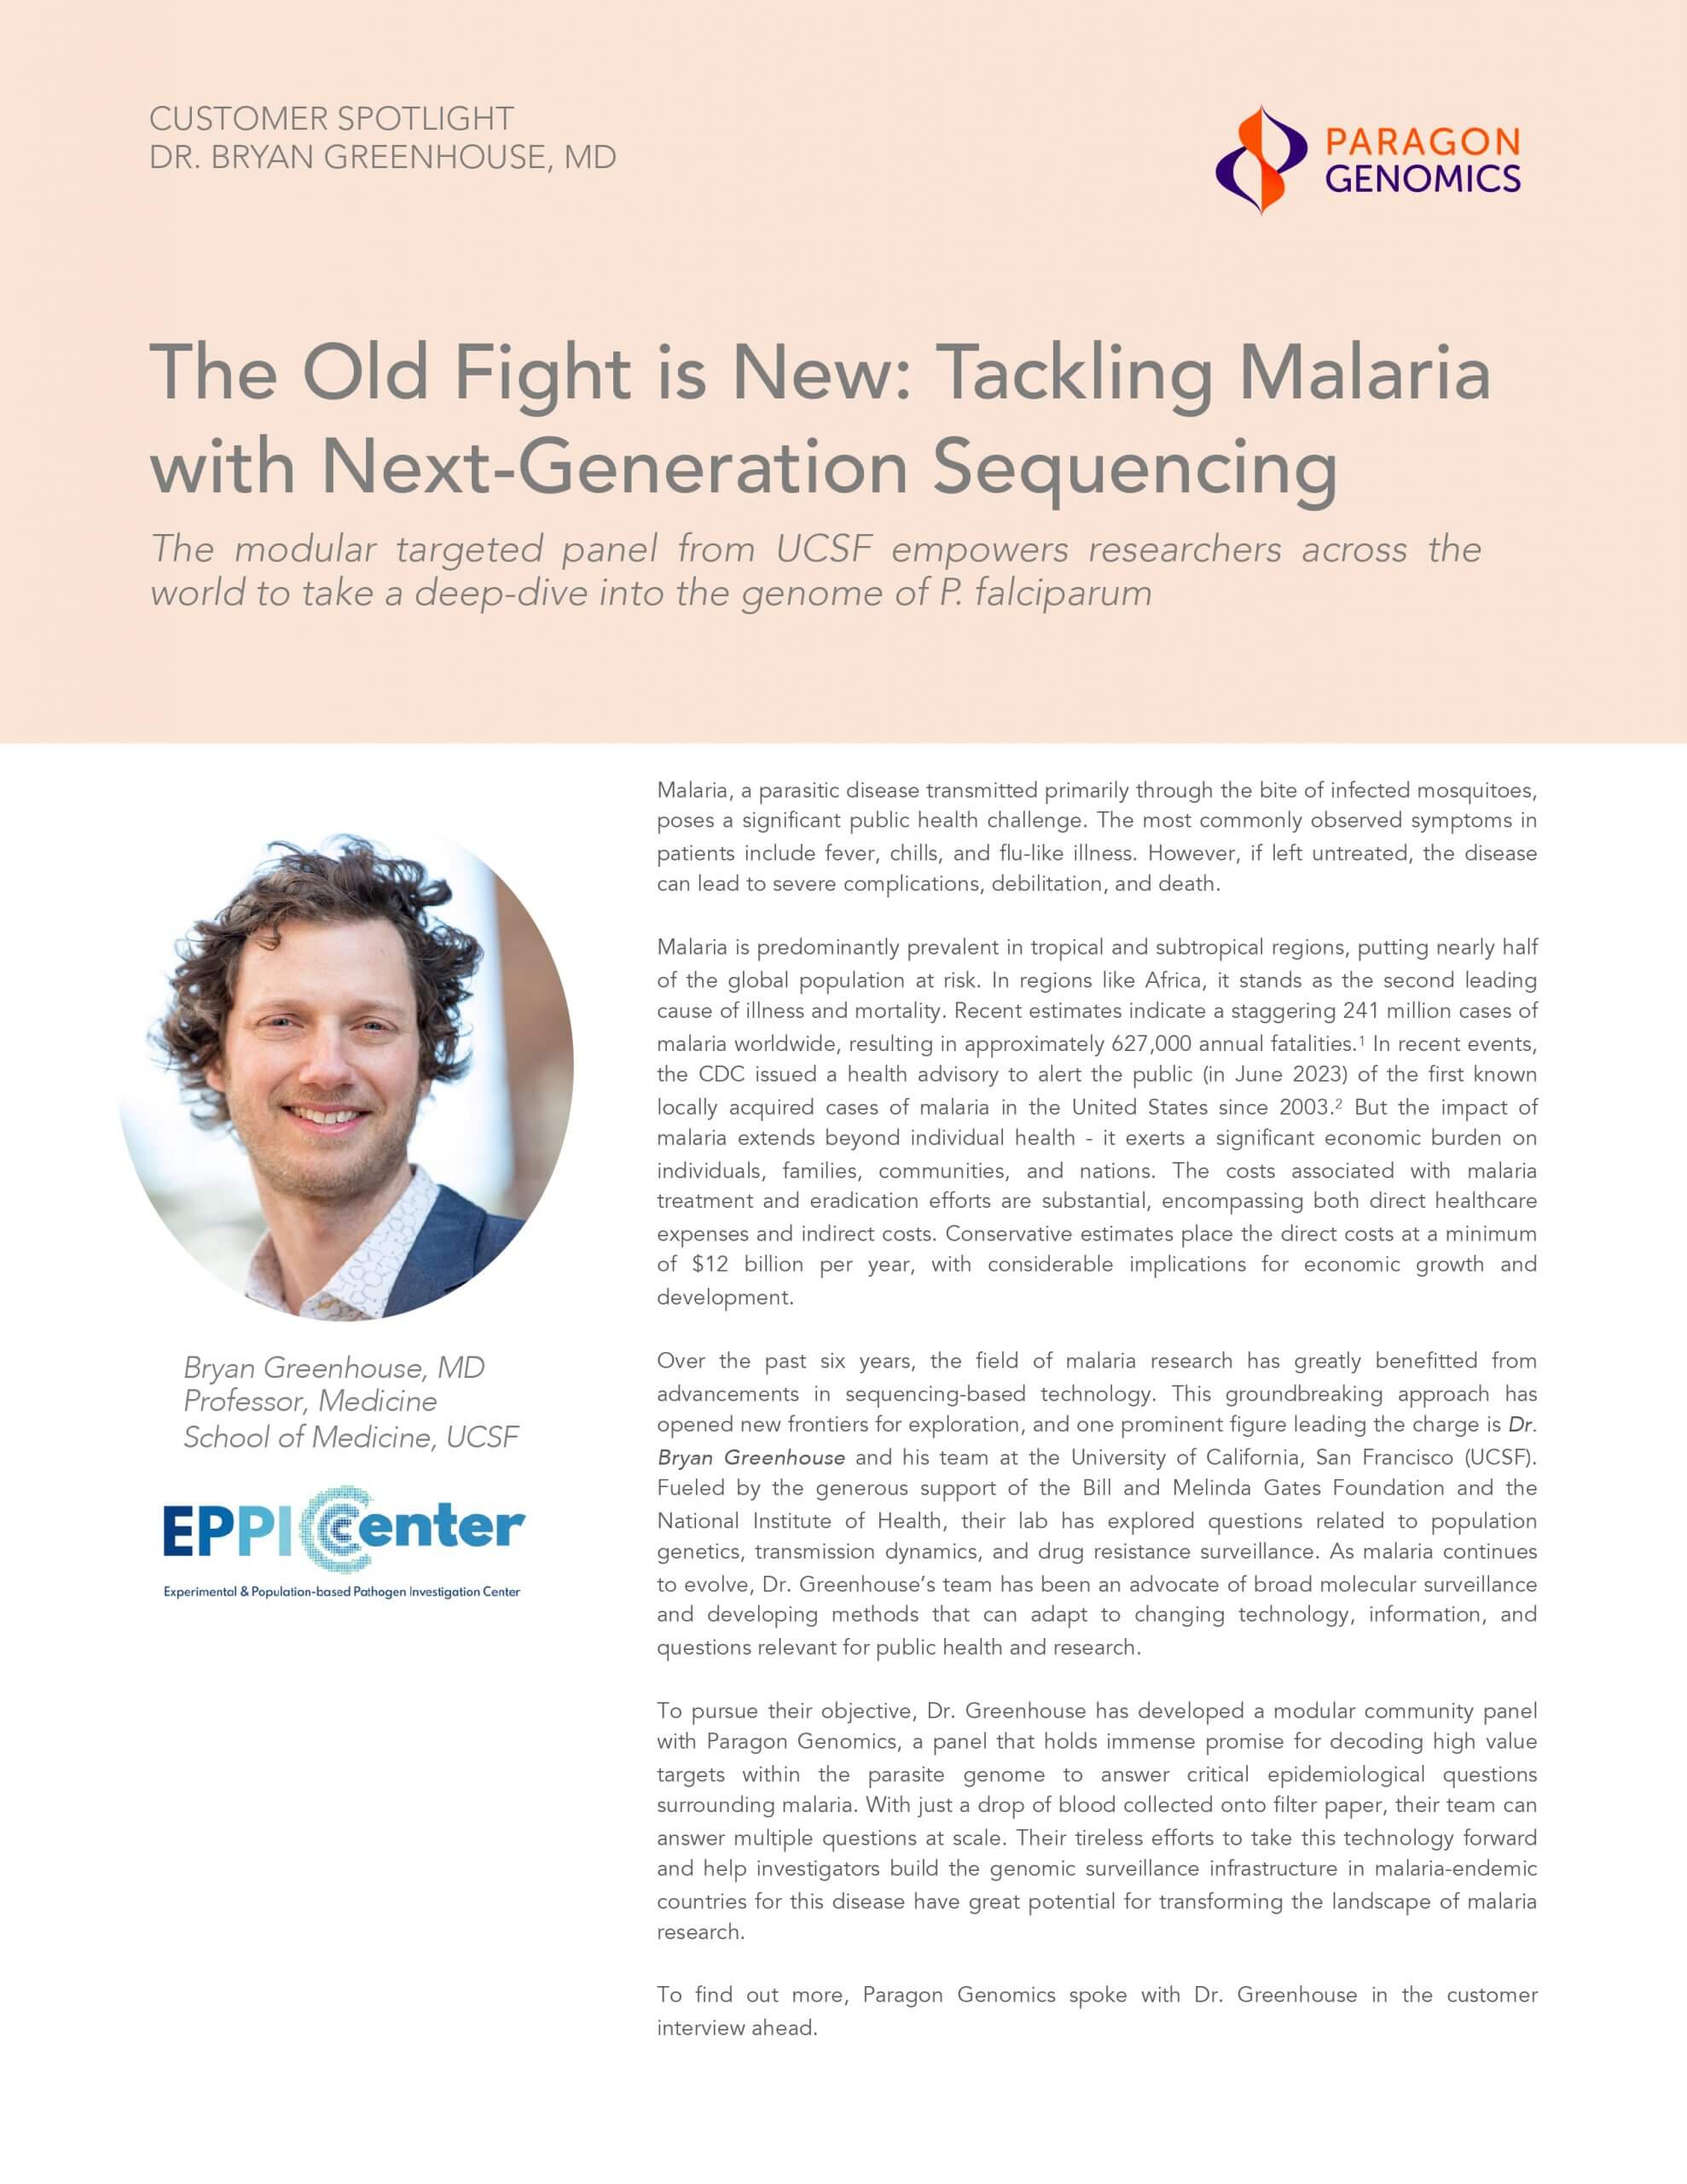 Tackling Malaria with Next-Generation Sequencing